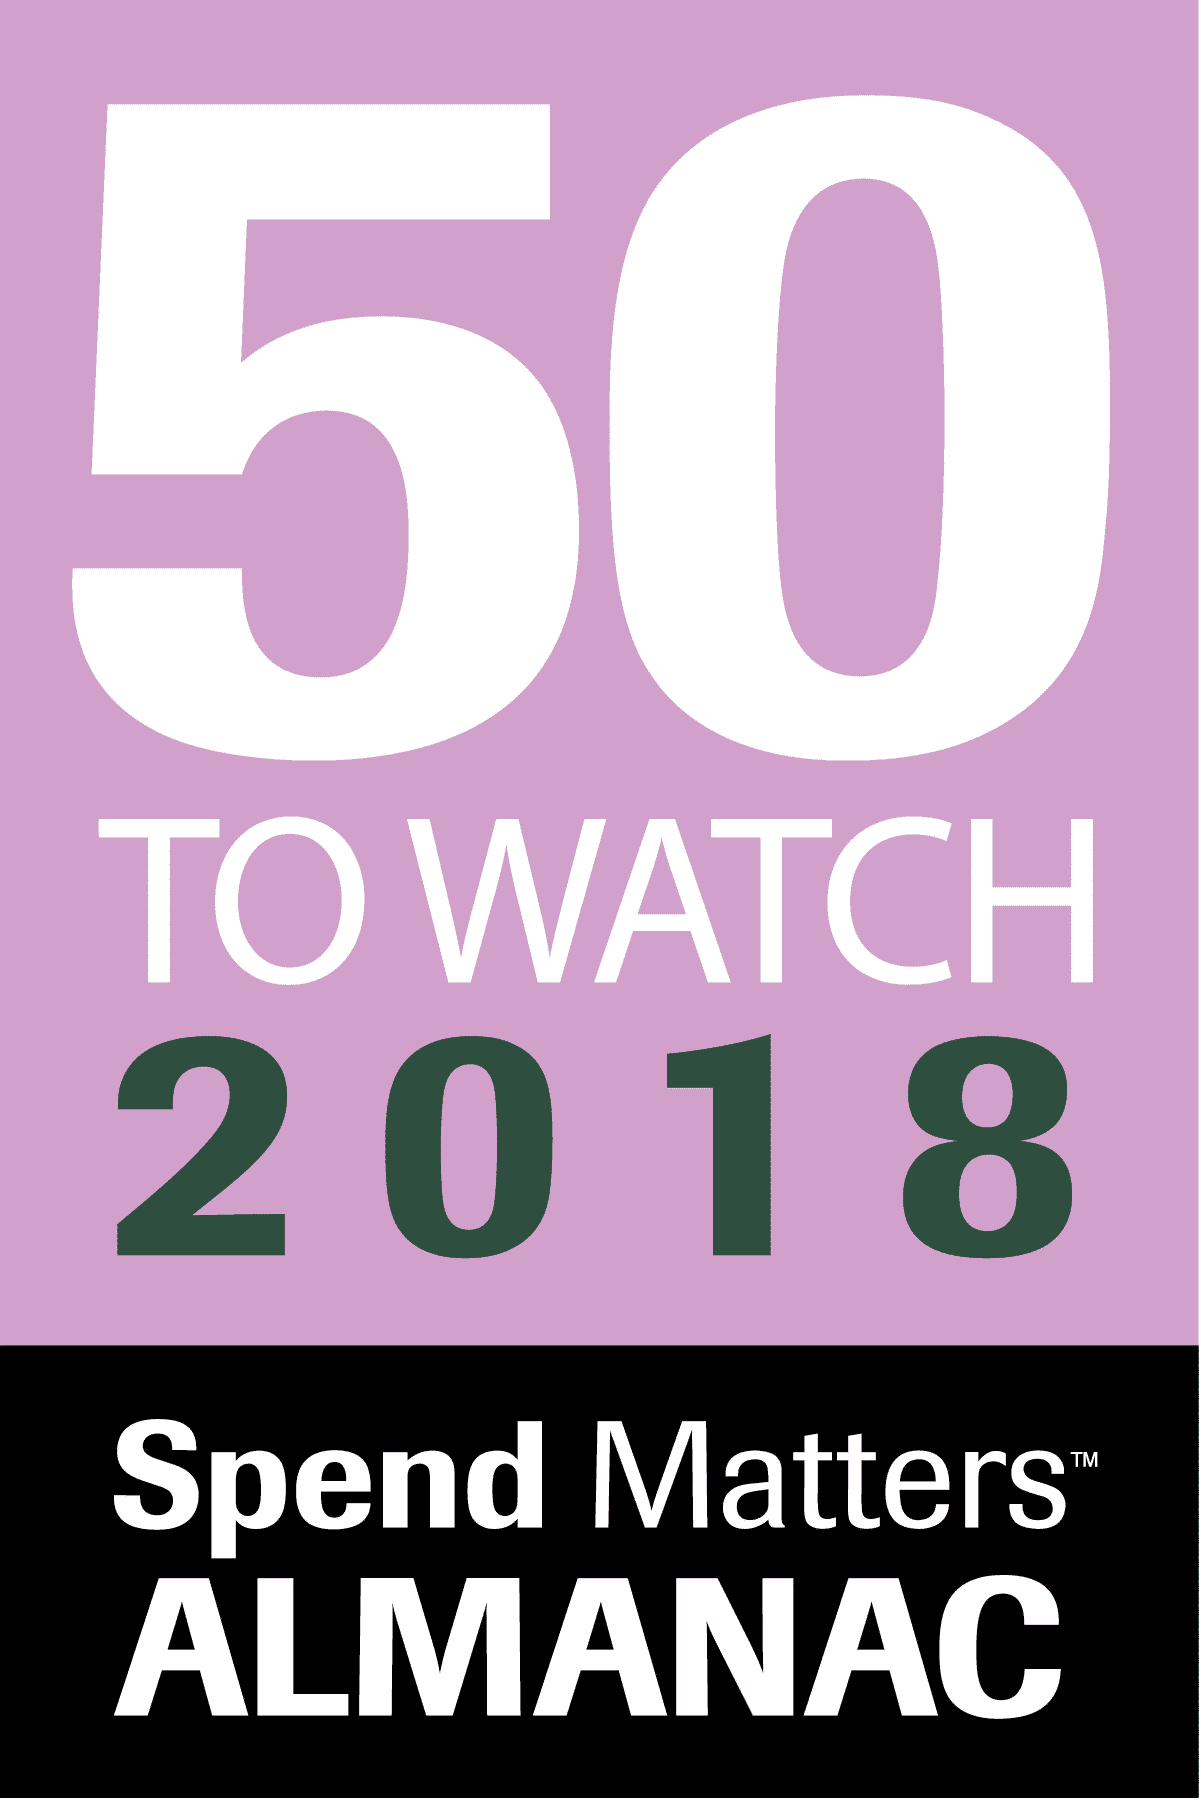 spend-matters-50-to-watch-2018-logo-lrg